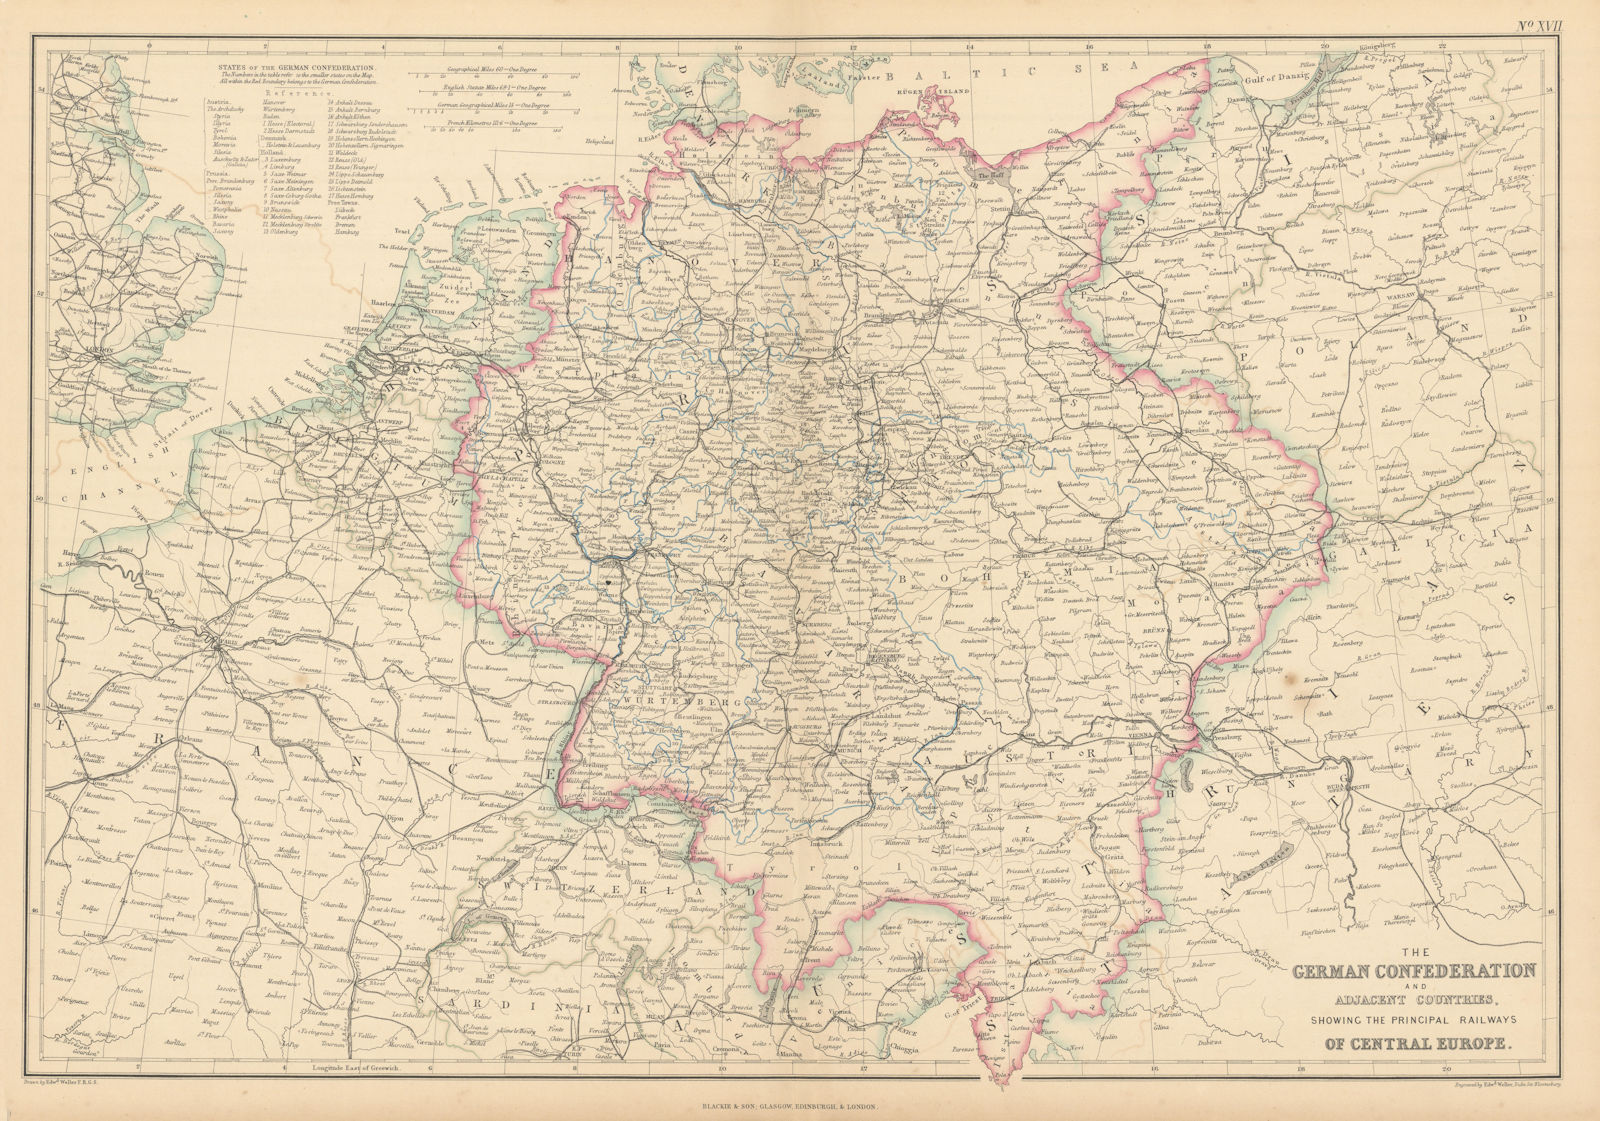 German Confederation & Central Europe railways. WELLER 1859 old antique map